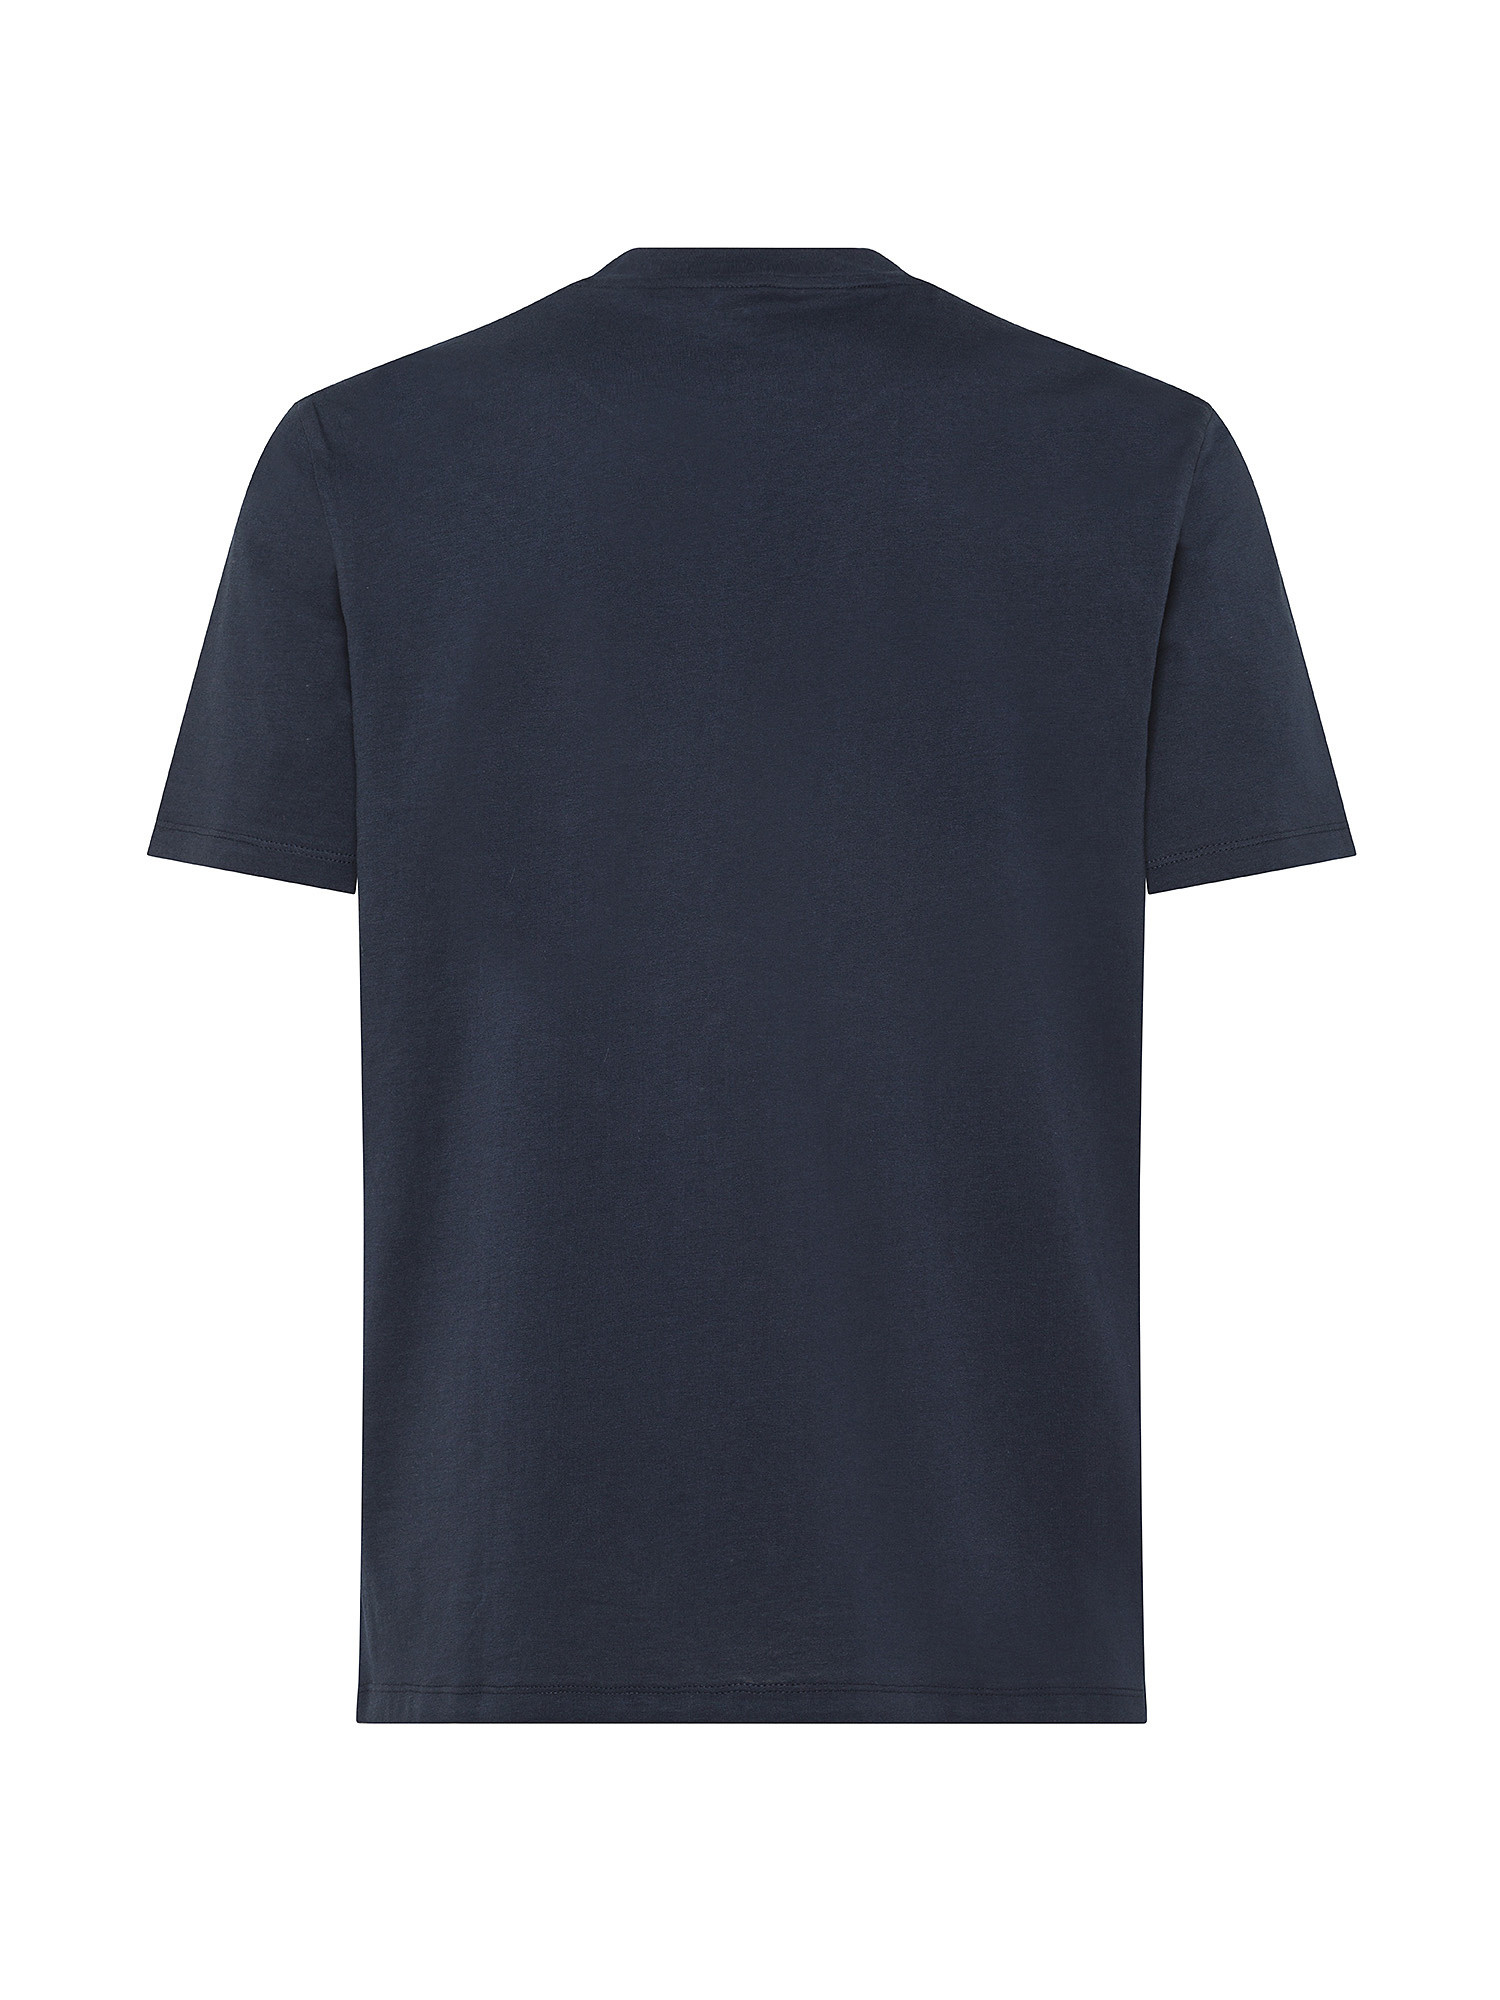 Hugo Logo cotton T-shirt, Dark Blue, large image number 1